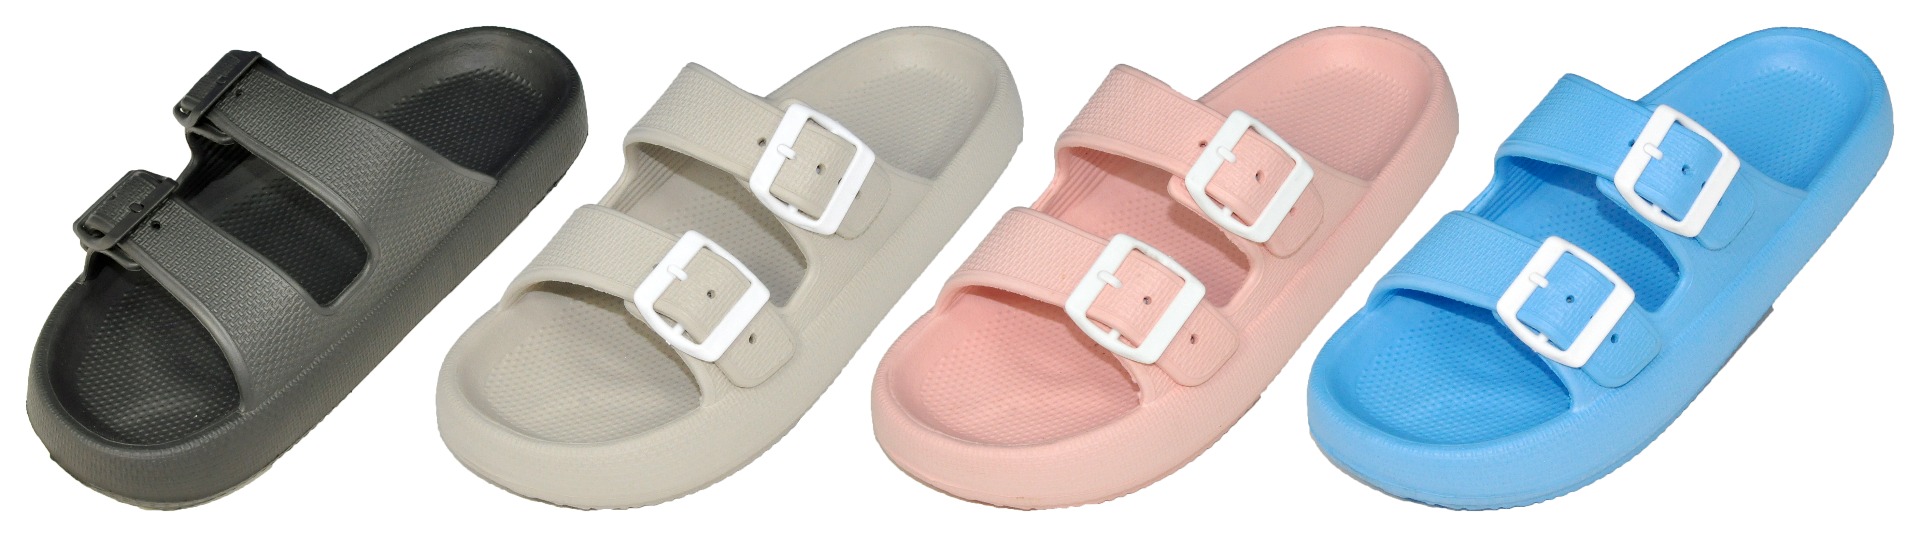 Women's Arizona Buckle Sandals w/ Soft Footbed